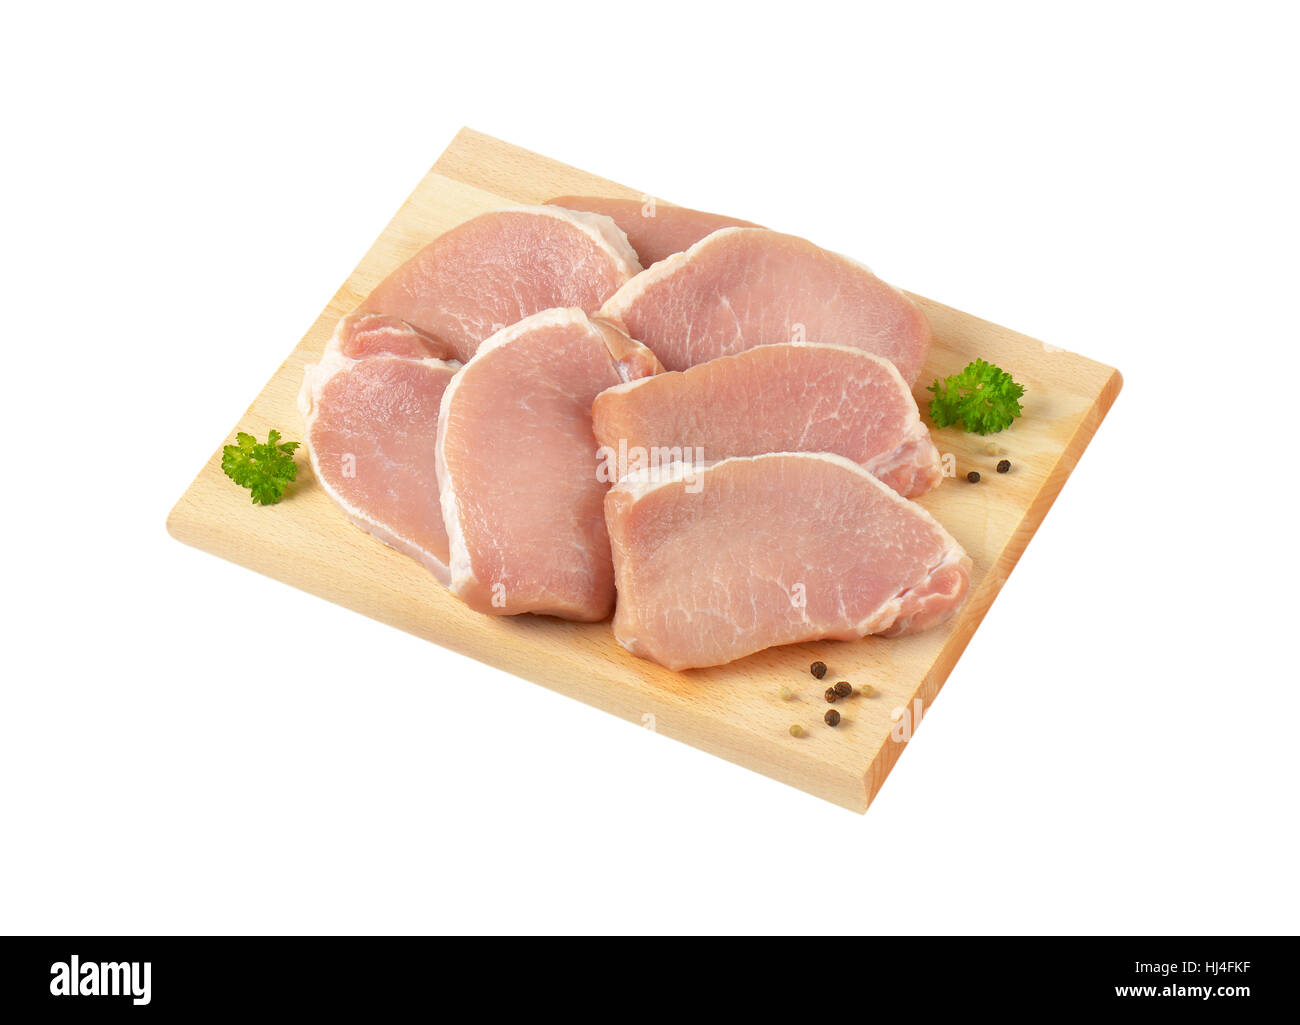 raw boneless pork loin chops on cutting board Stock Photo